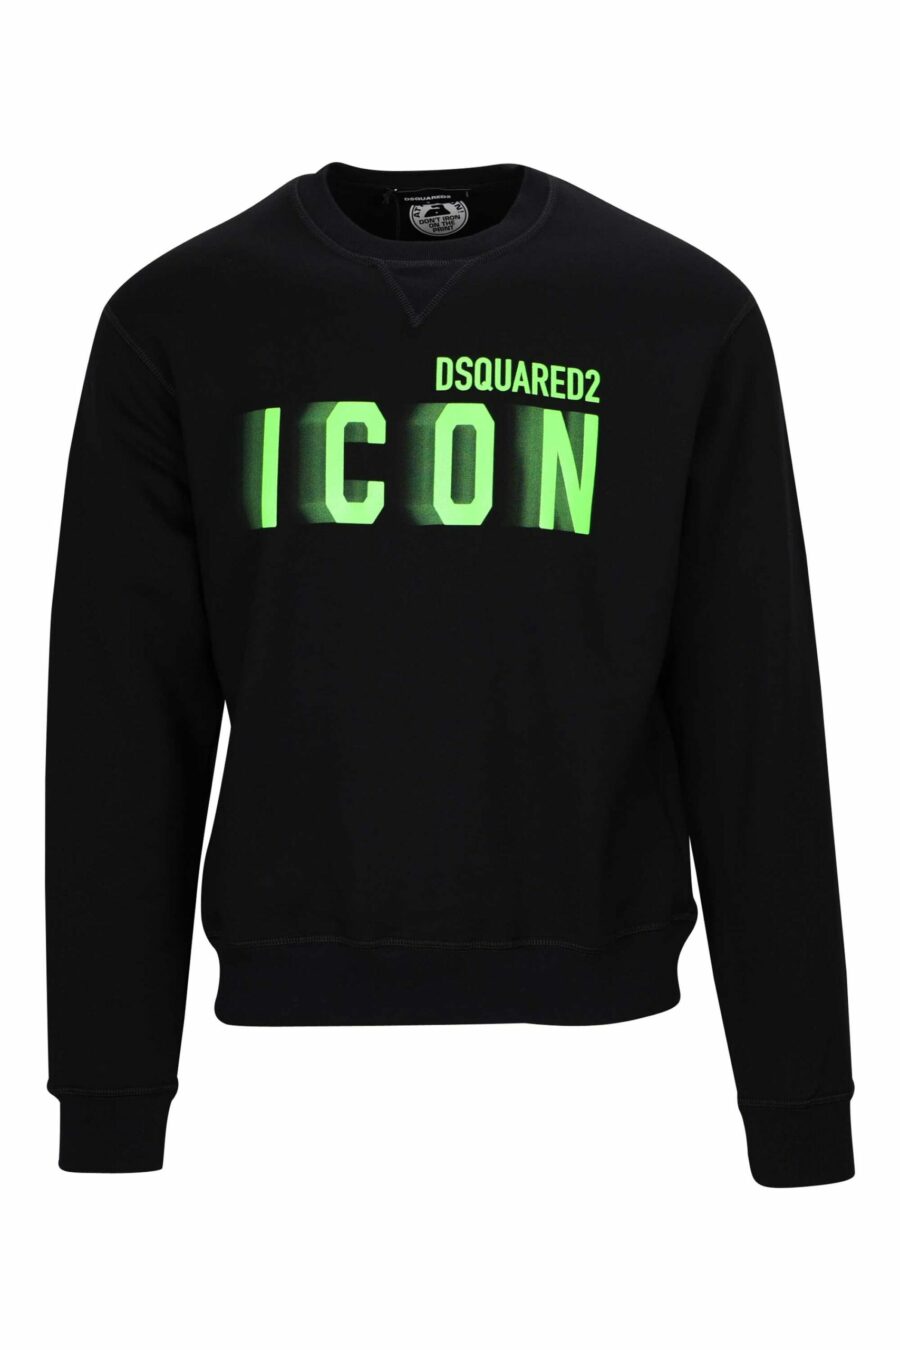 Sweatshirt noir avec maxilogo "icon" flou vert fluo - 8054148360863 scaled